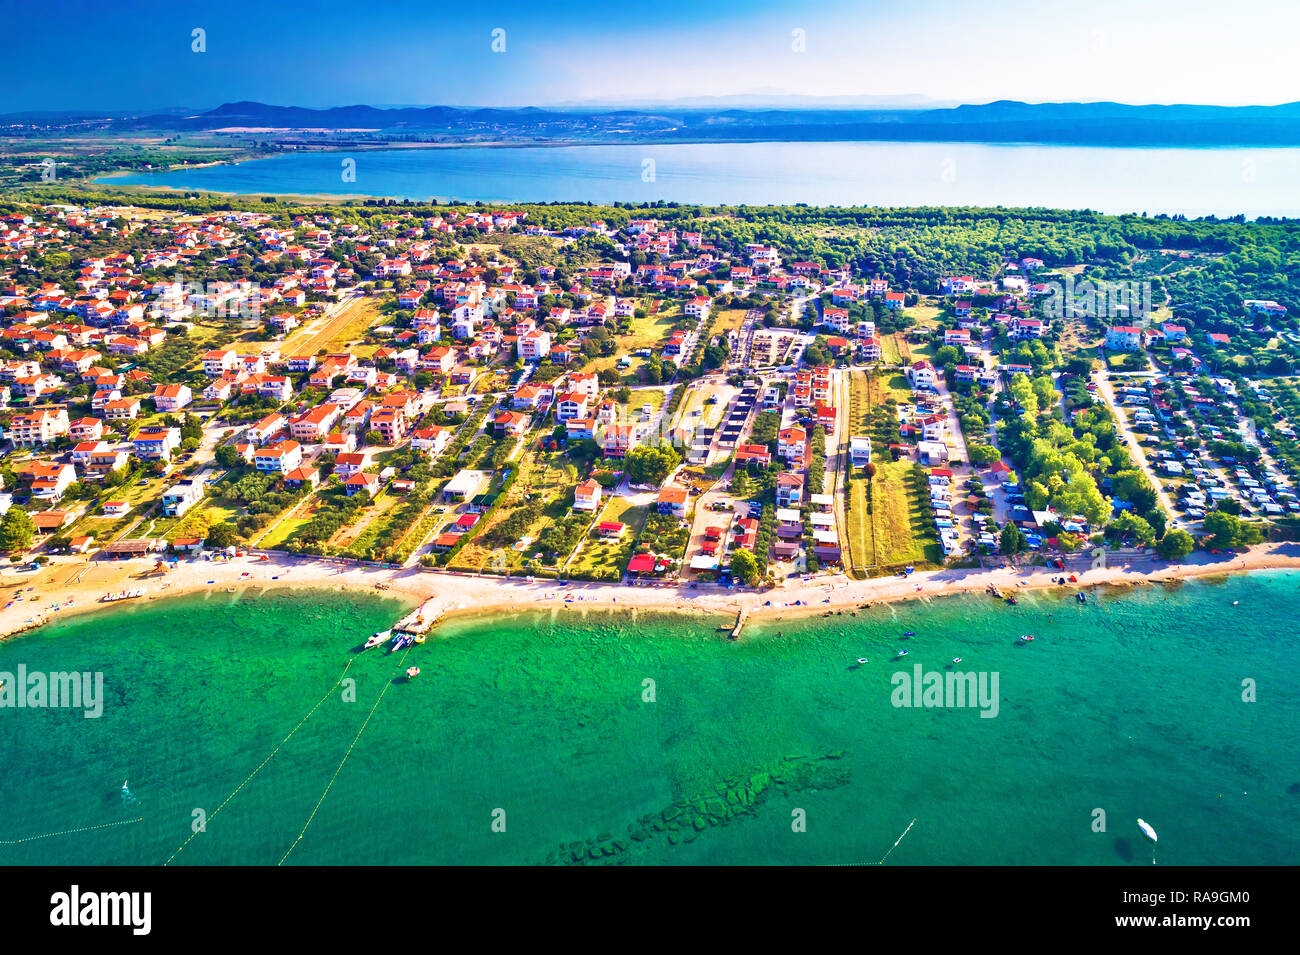 Adriatic sea and Vransko lake aerial view, Town of Pakostane, Dalmatia region of Croatia Stock Photo